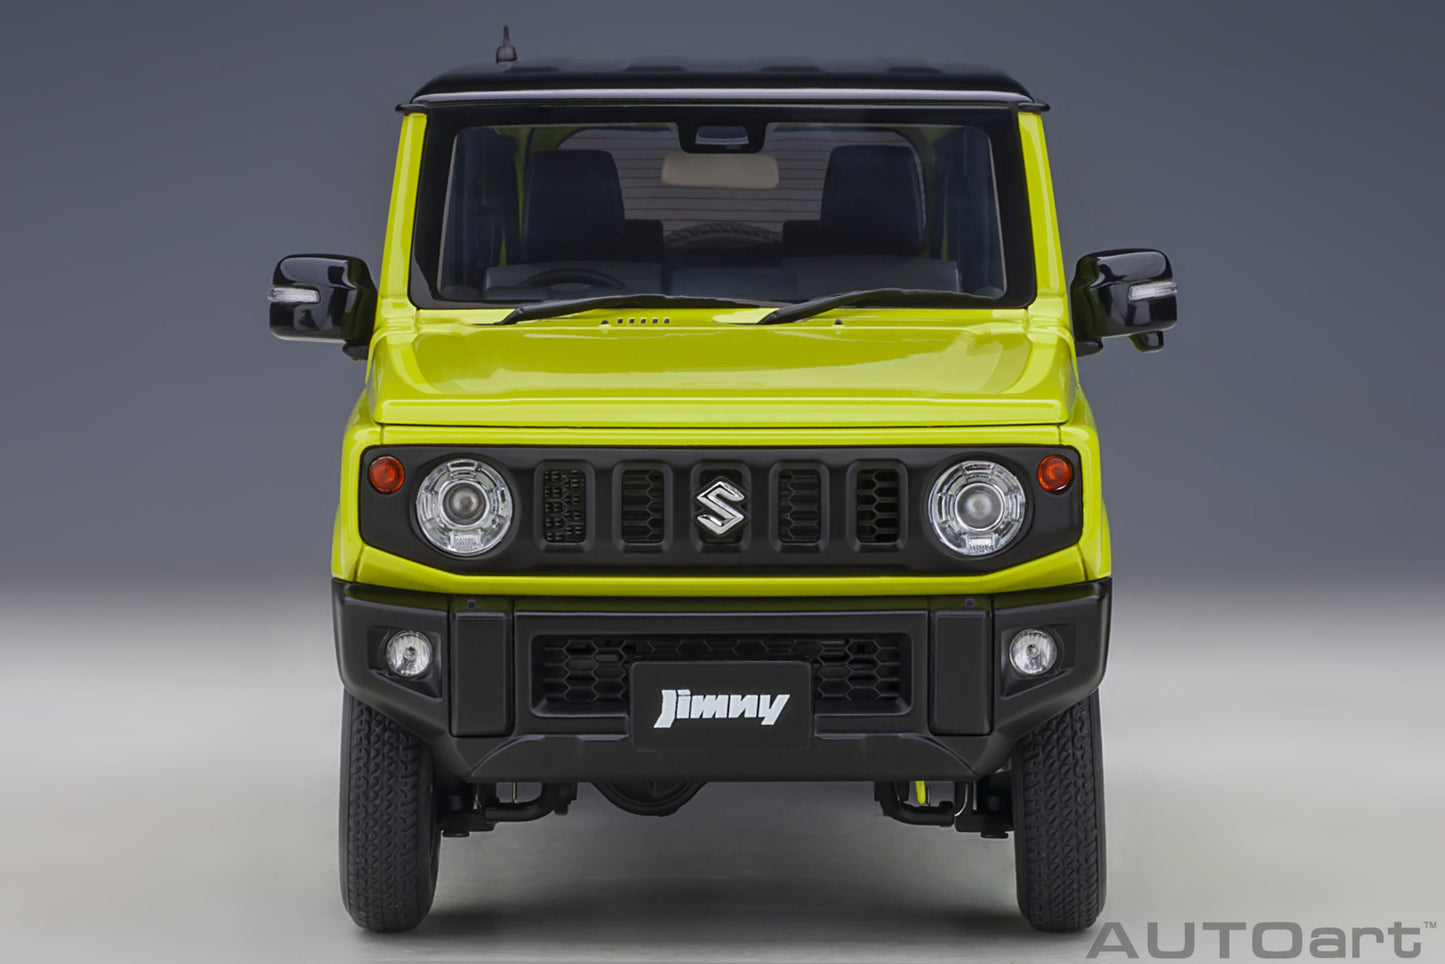 AUTOart 1:18 Suzuki Jimny (JB64) (Kinetic Yellow with Black roof) 78501